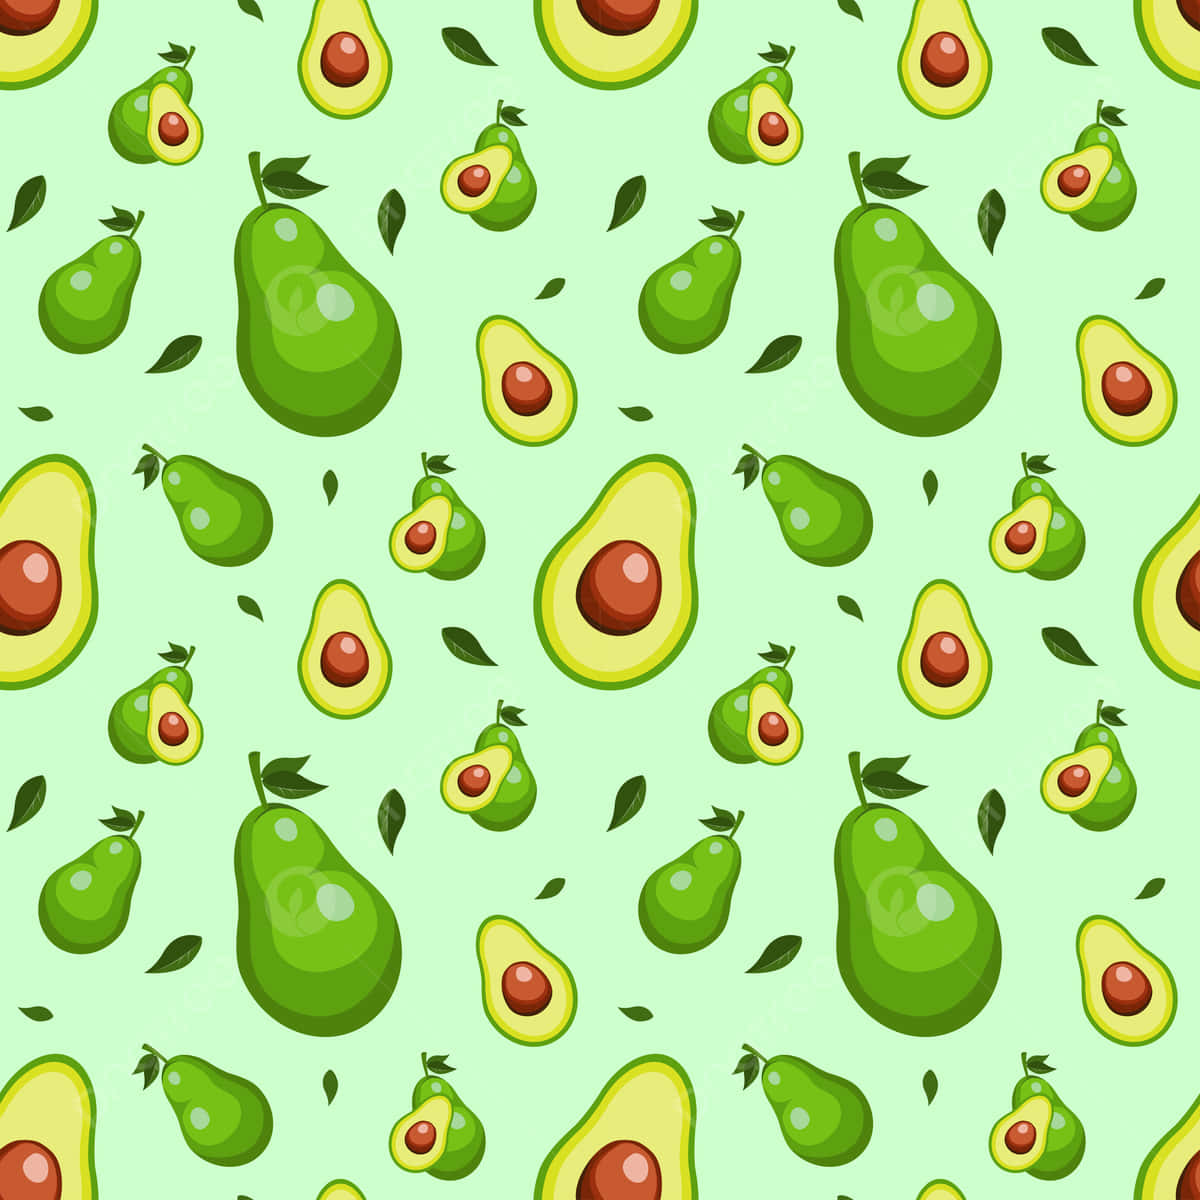 Cute Avocado Wallpaper - Your daily dose of green!